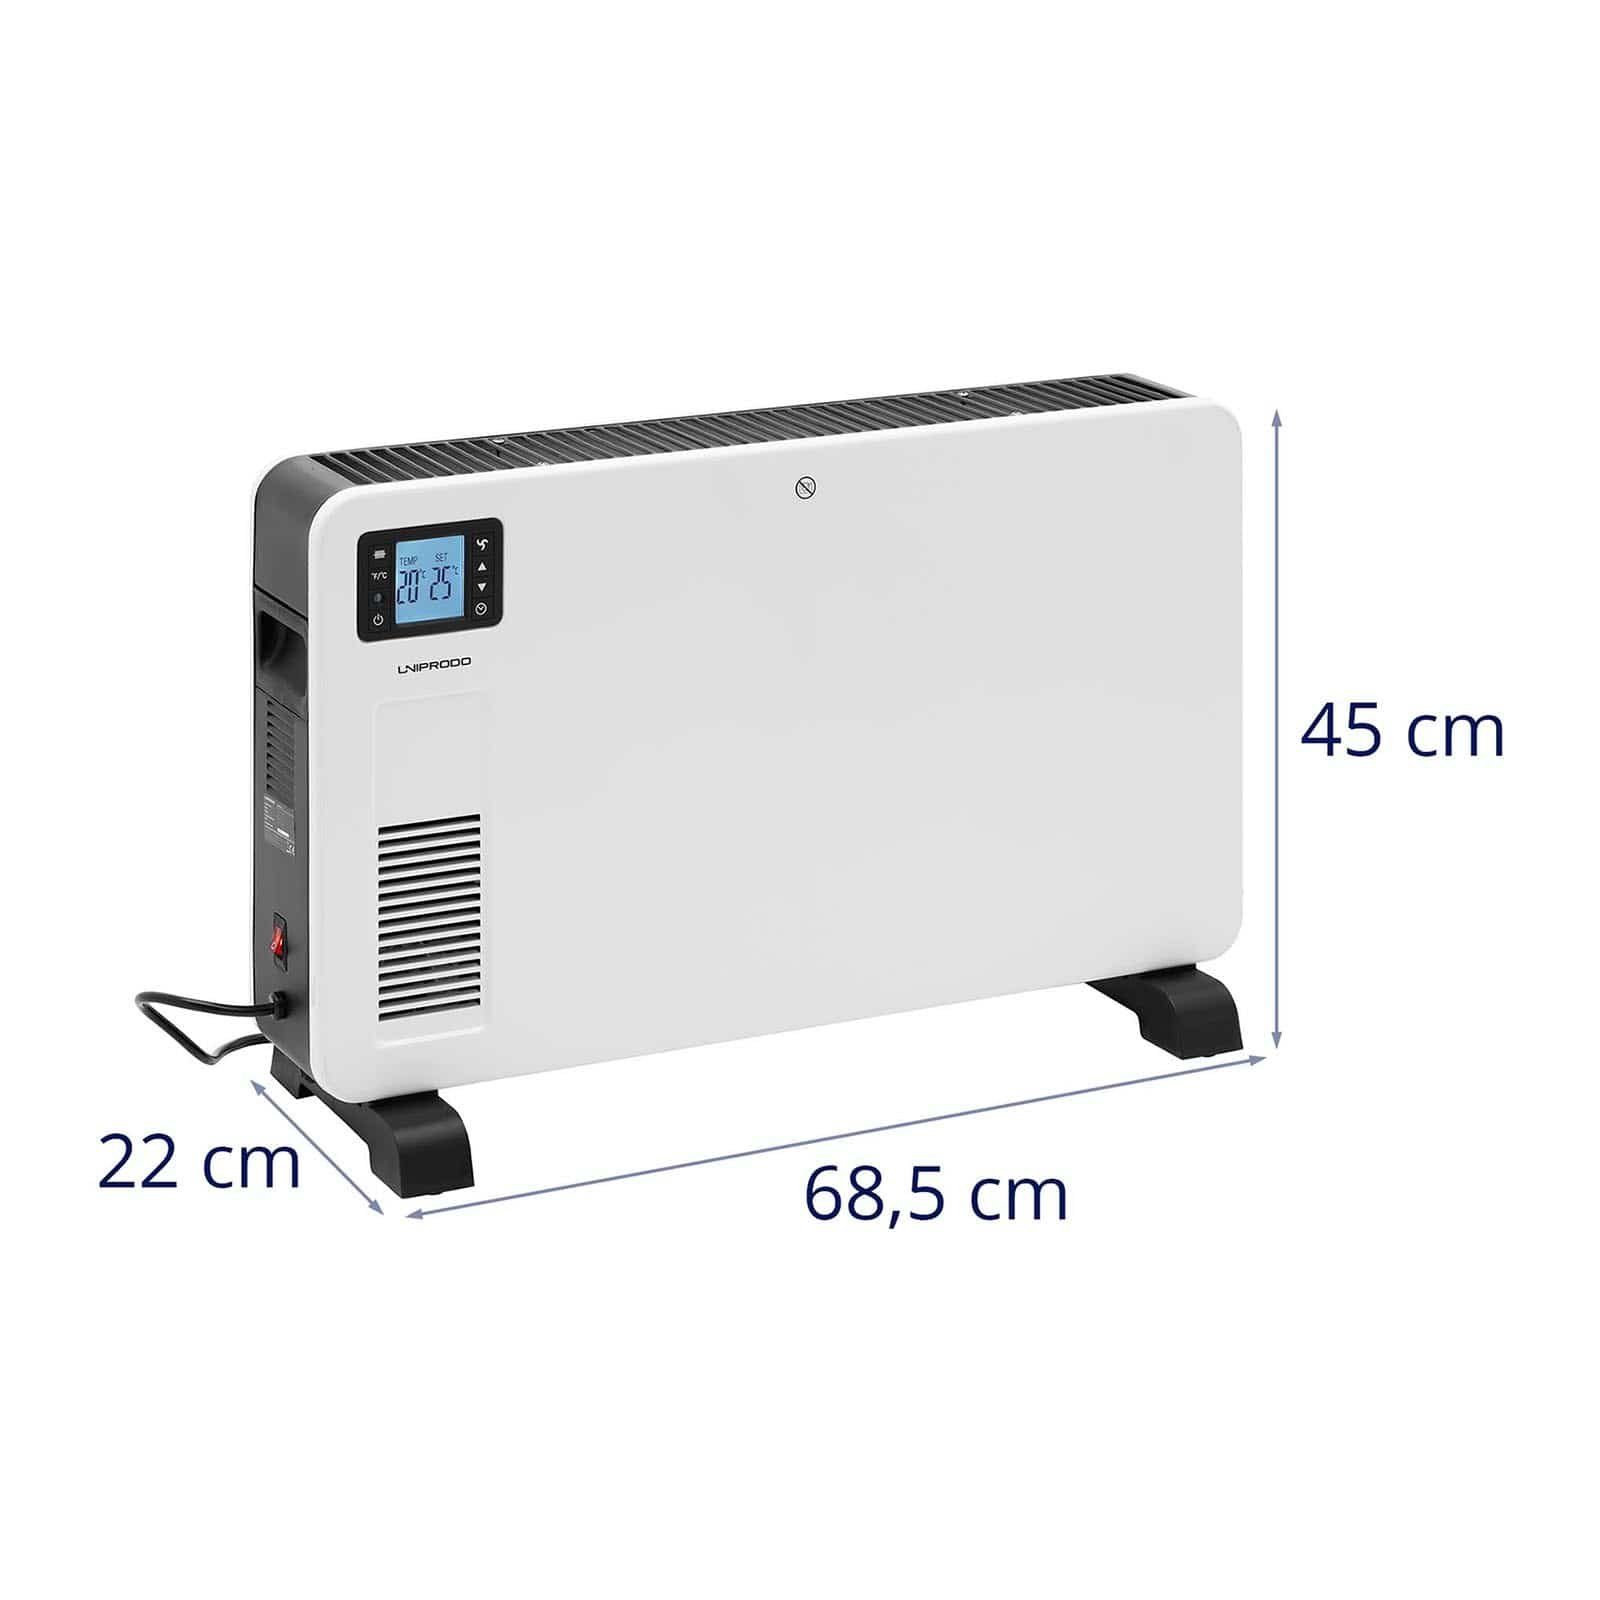 Uniprodo Konvektor m² °C 37 5 - W Konvektorheizung Timer Elektroheizung 2300 25 LCD